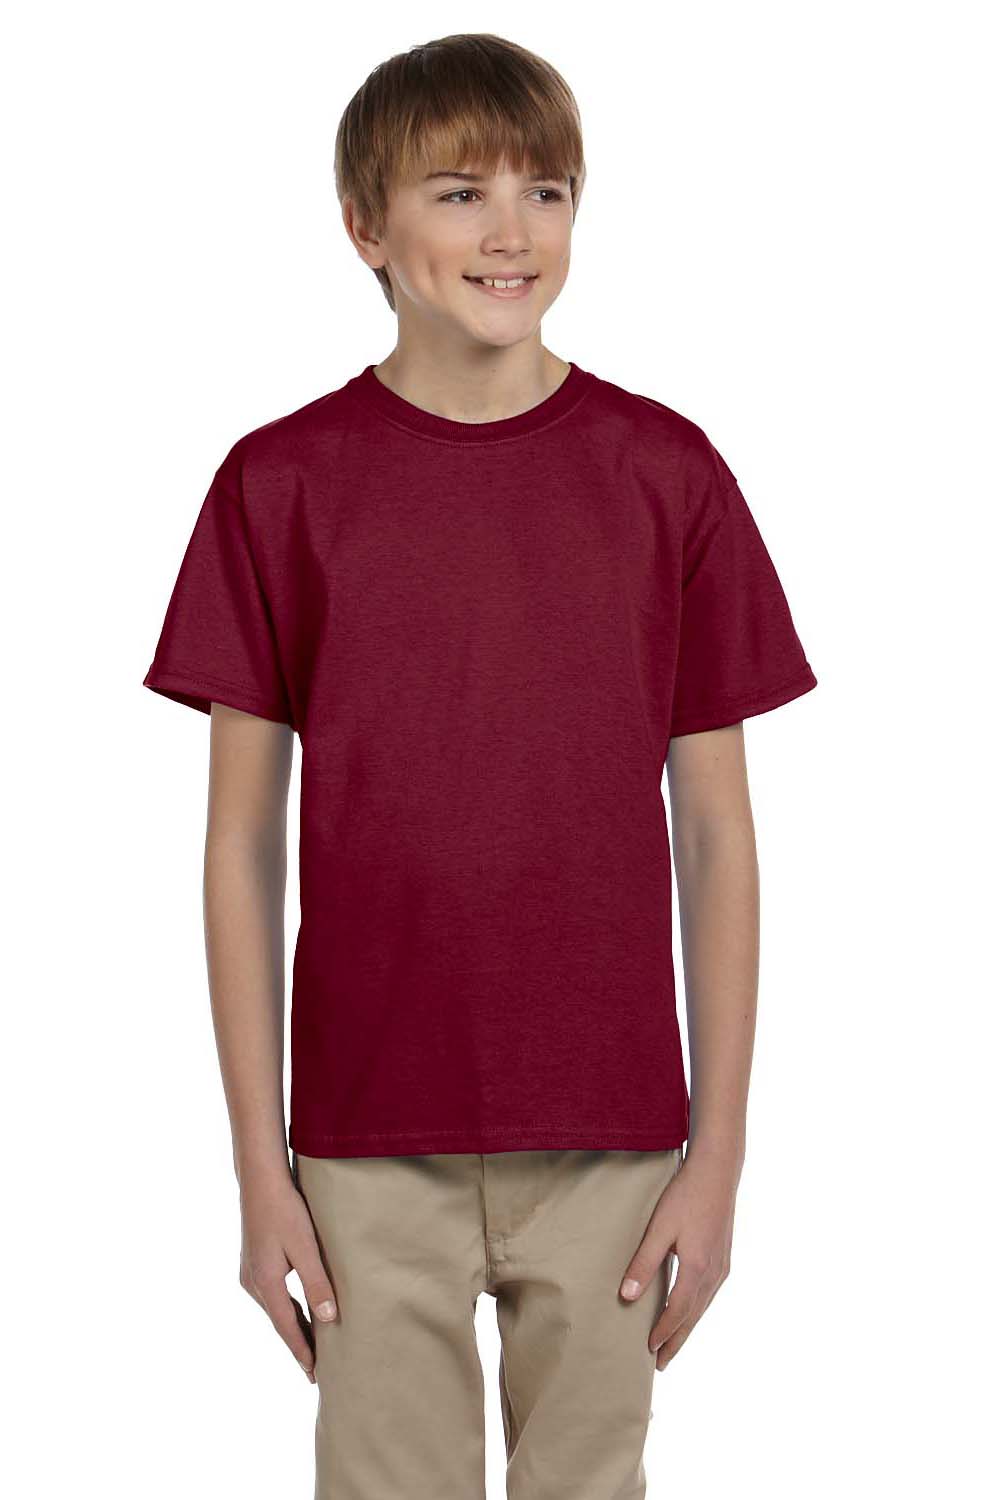 Hanes 5370 Youth EcoSmart Short Sleeve Crewneck T-Shirt Cardinal Red Front